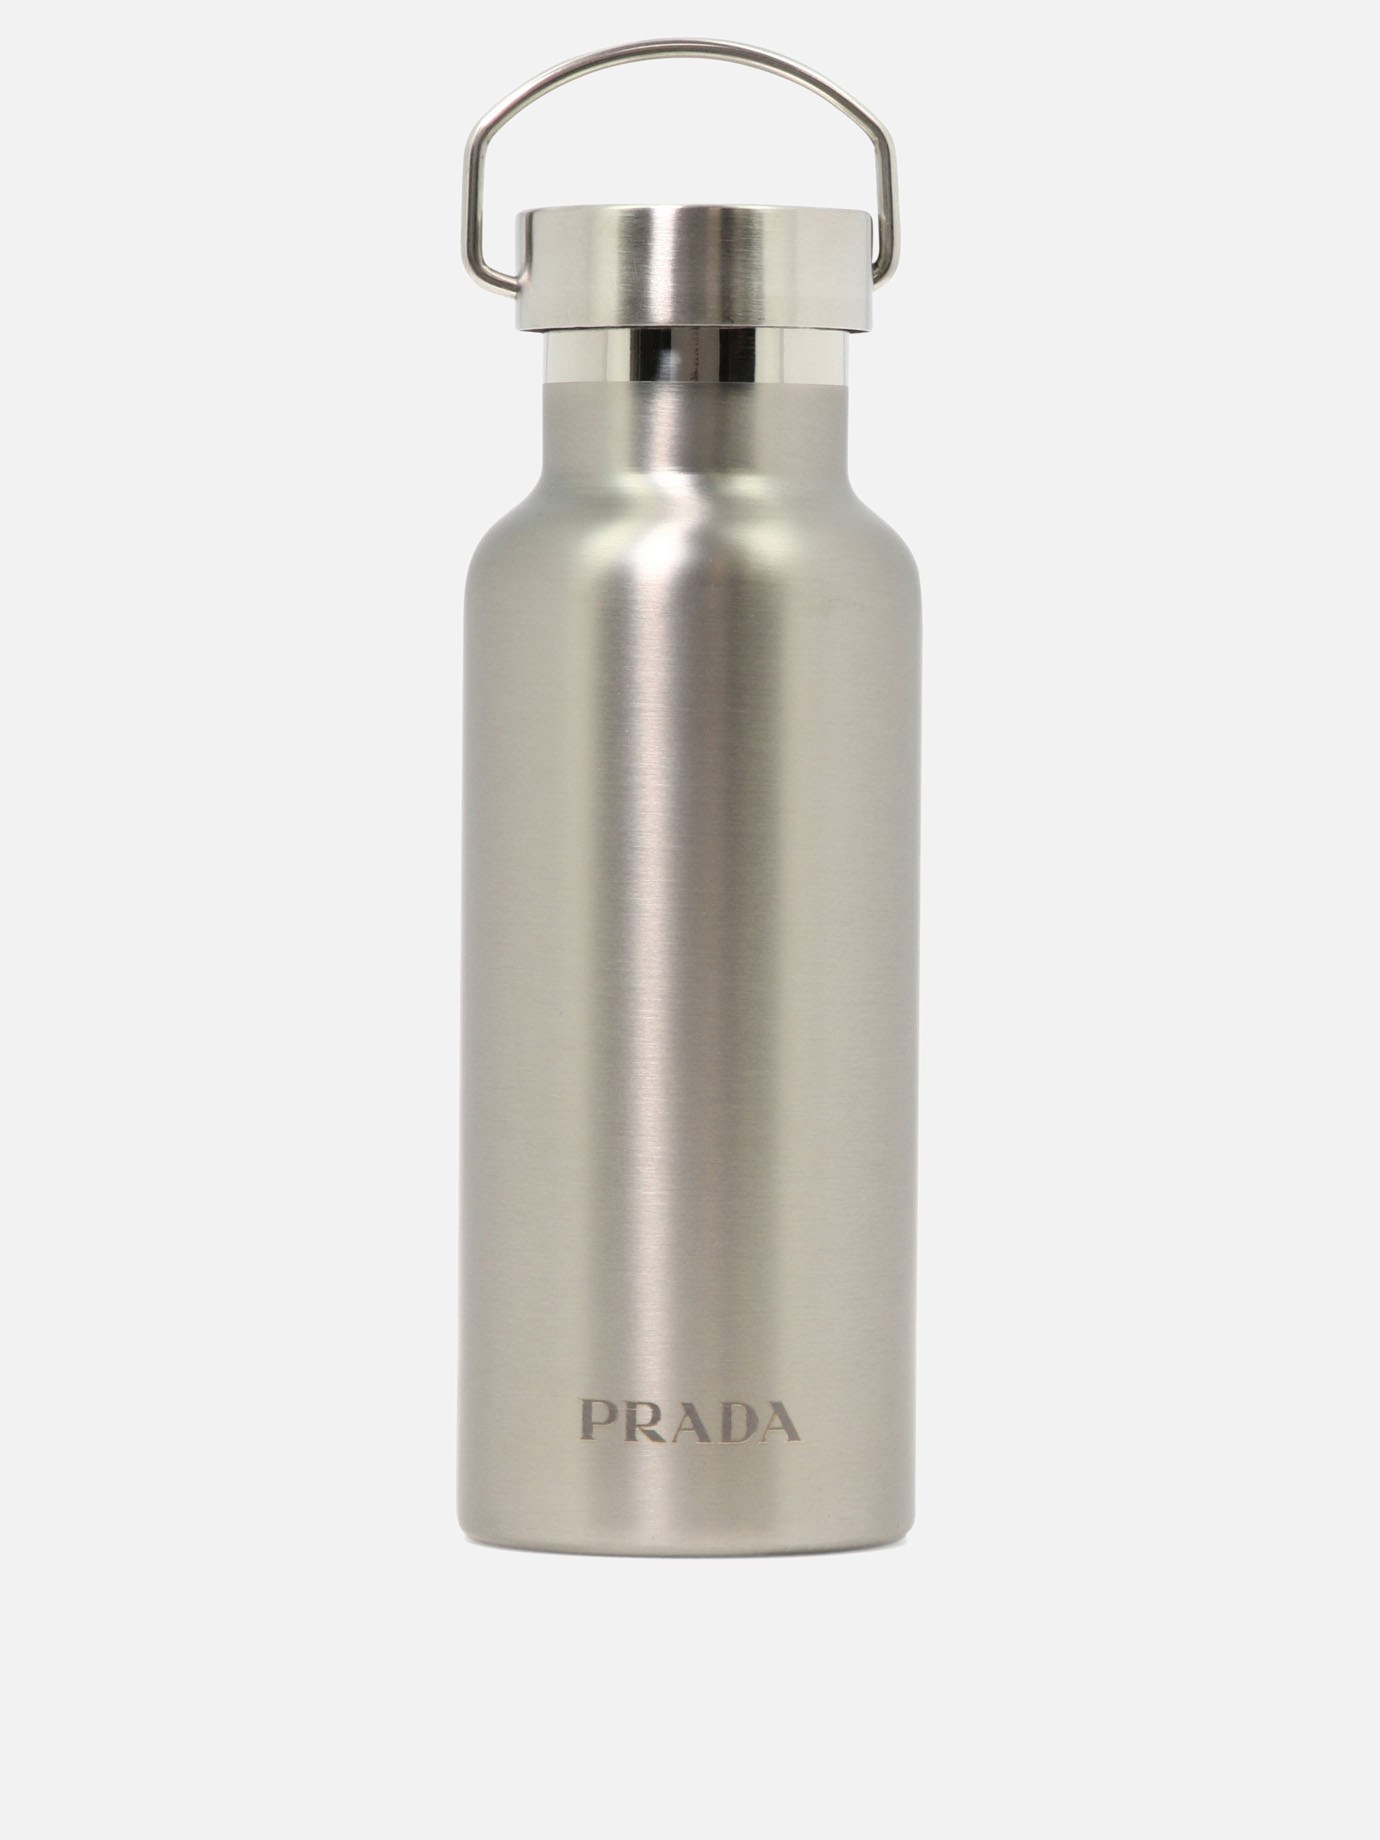 Stainless steel bottle by Prada